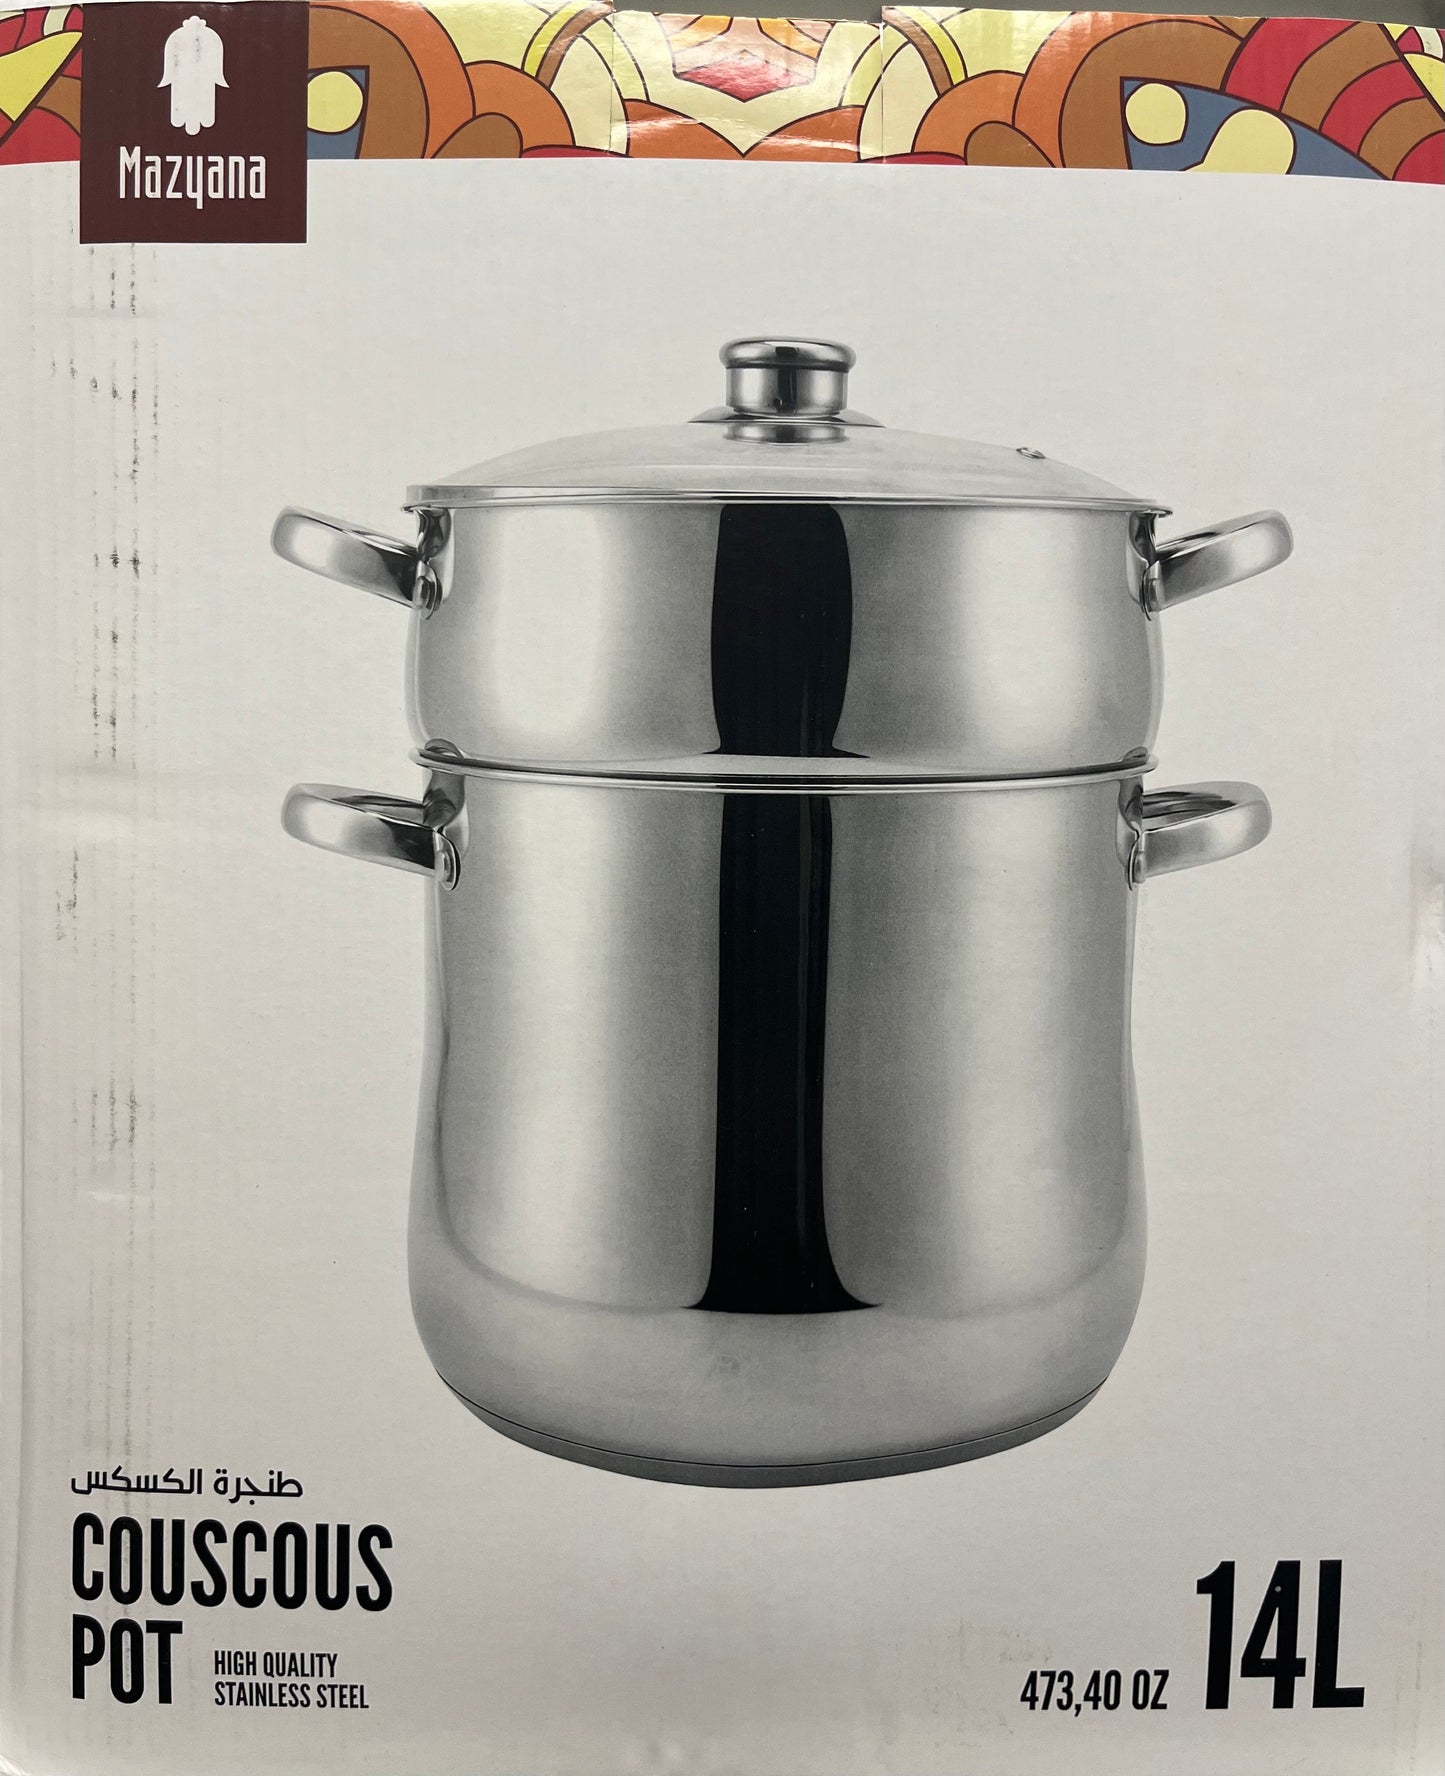 Couscousier Pot Stainless Steel Steamer MAZYANA